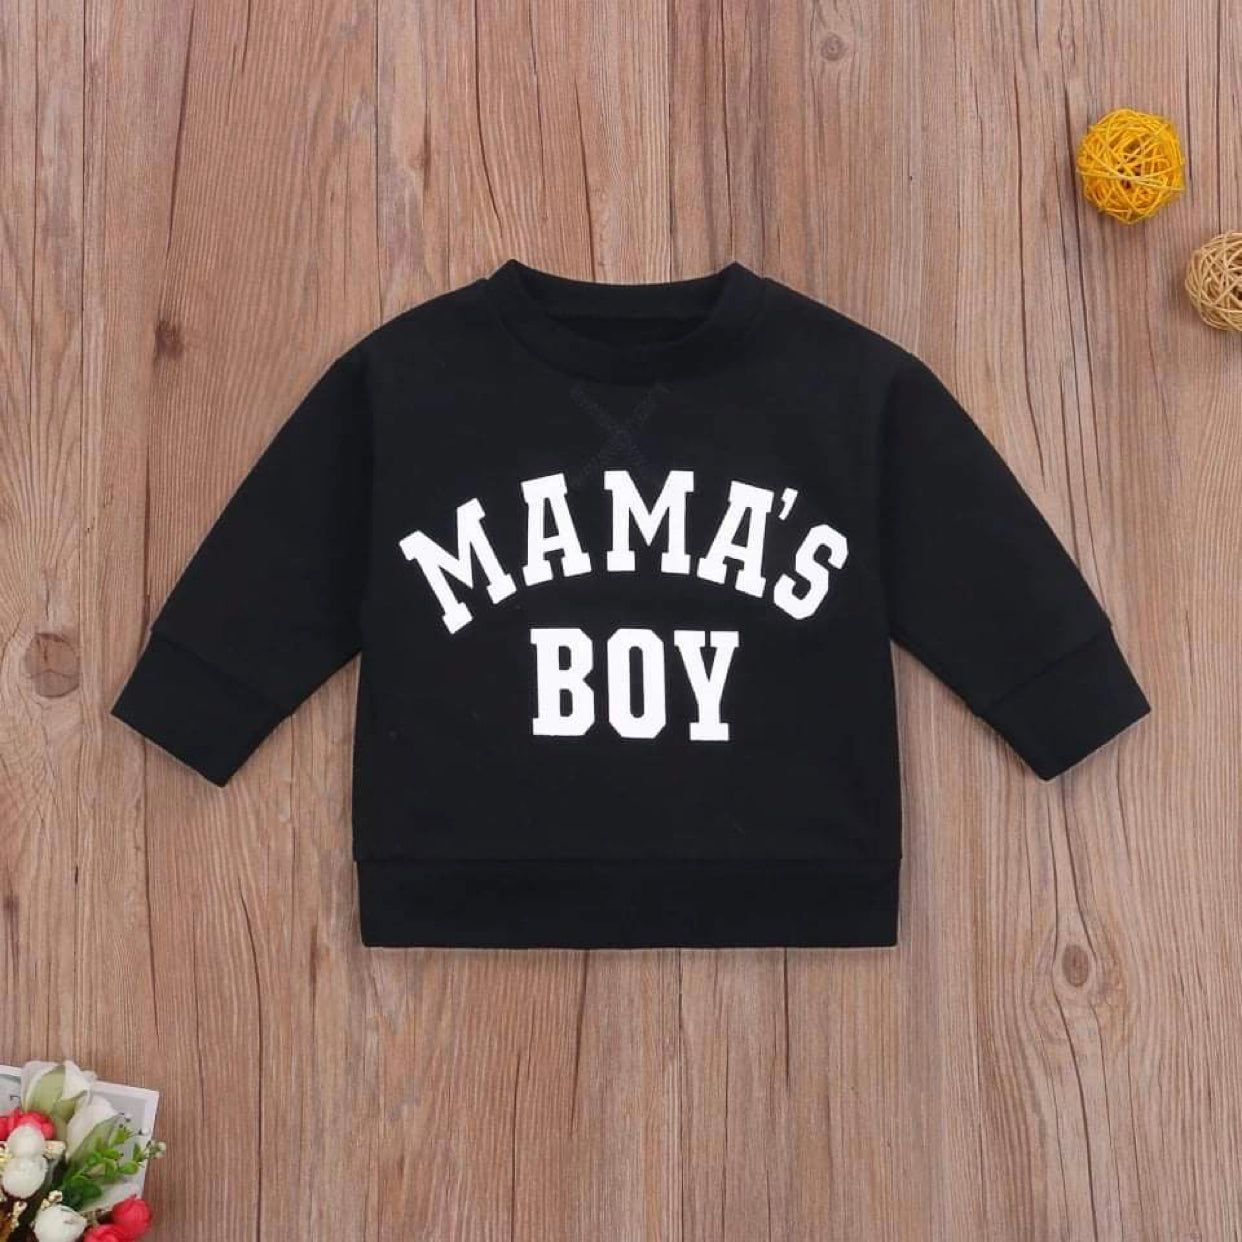 Mama Toddler Sweatshirt